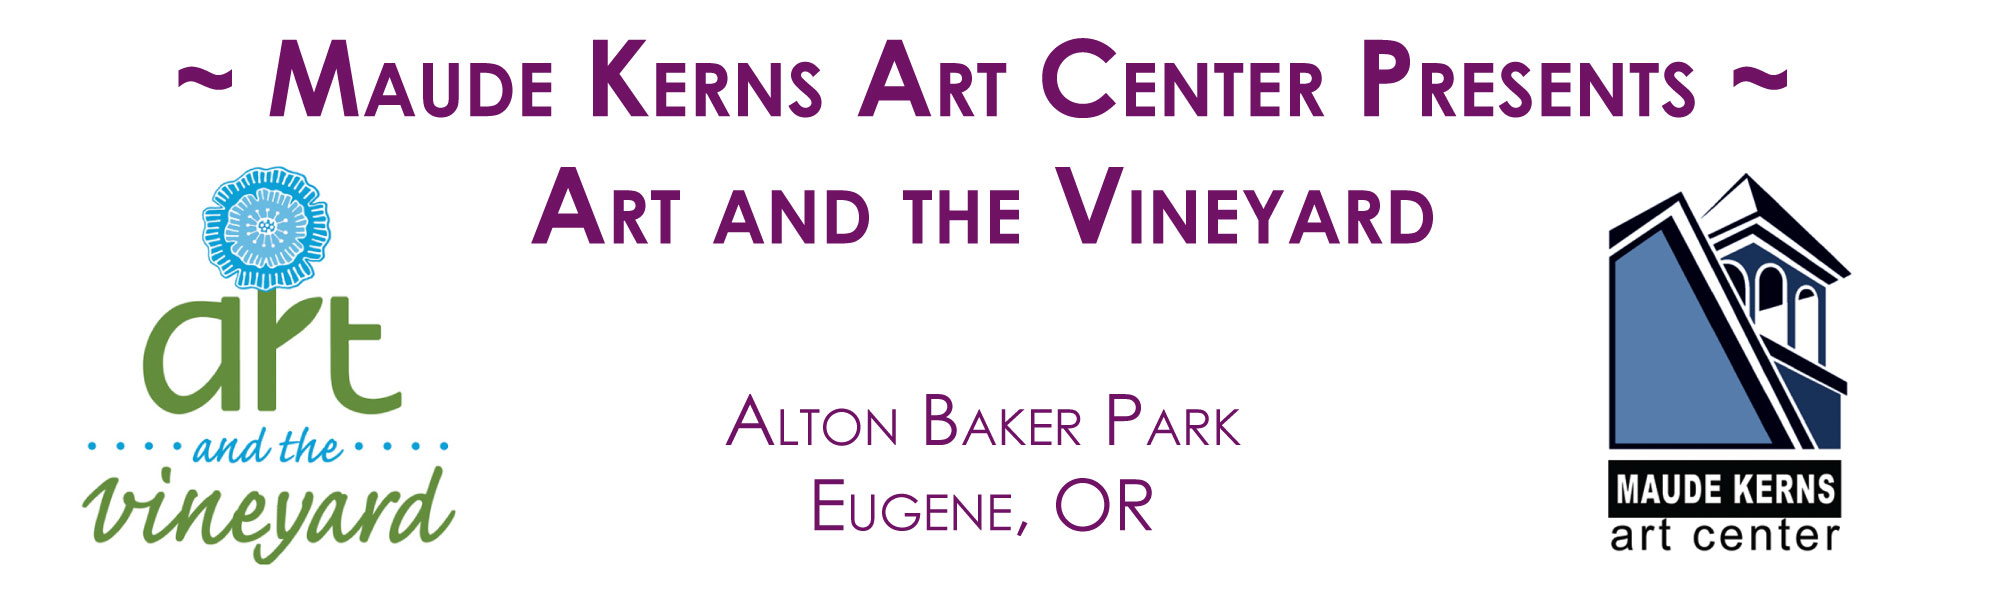 2019 Eugene Art and The Vineyard